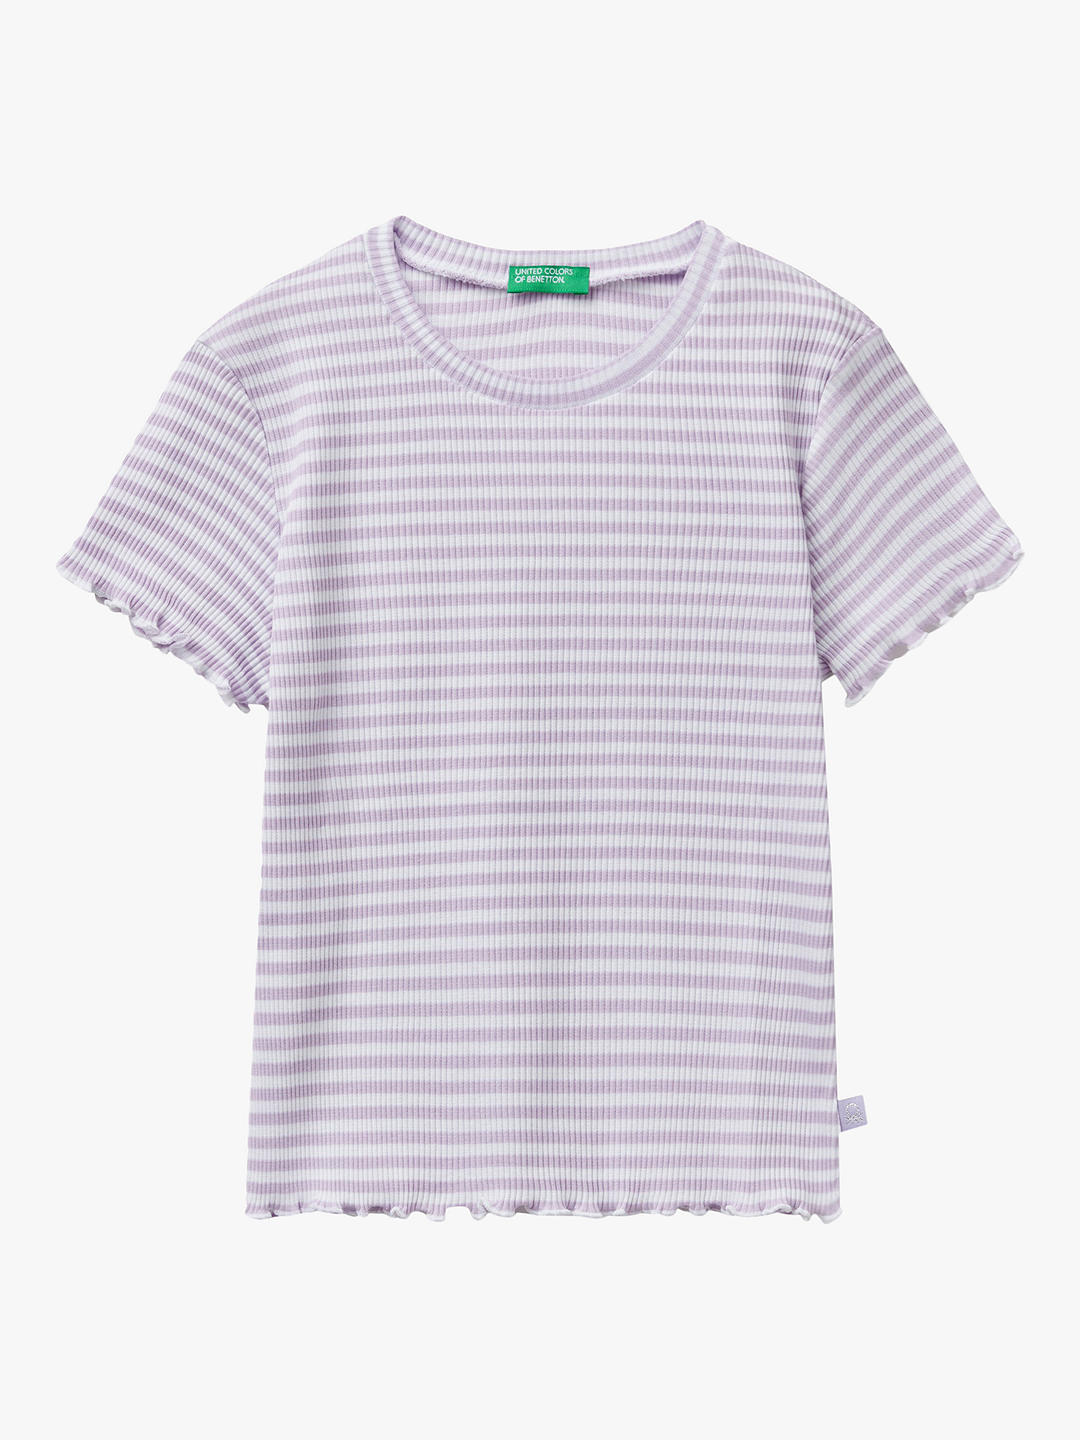 Benetton Kids' Stripe Rib Short Sleeve T-Shirt, Purple/Multi